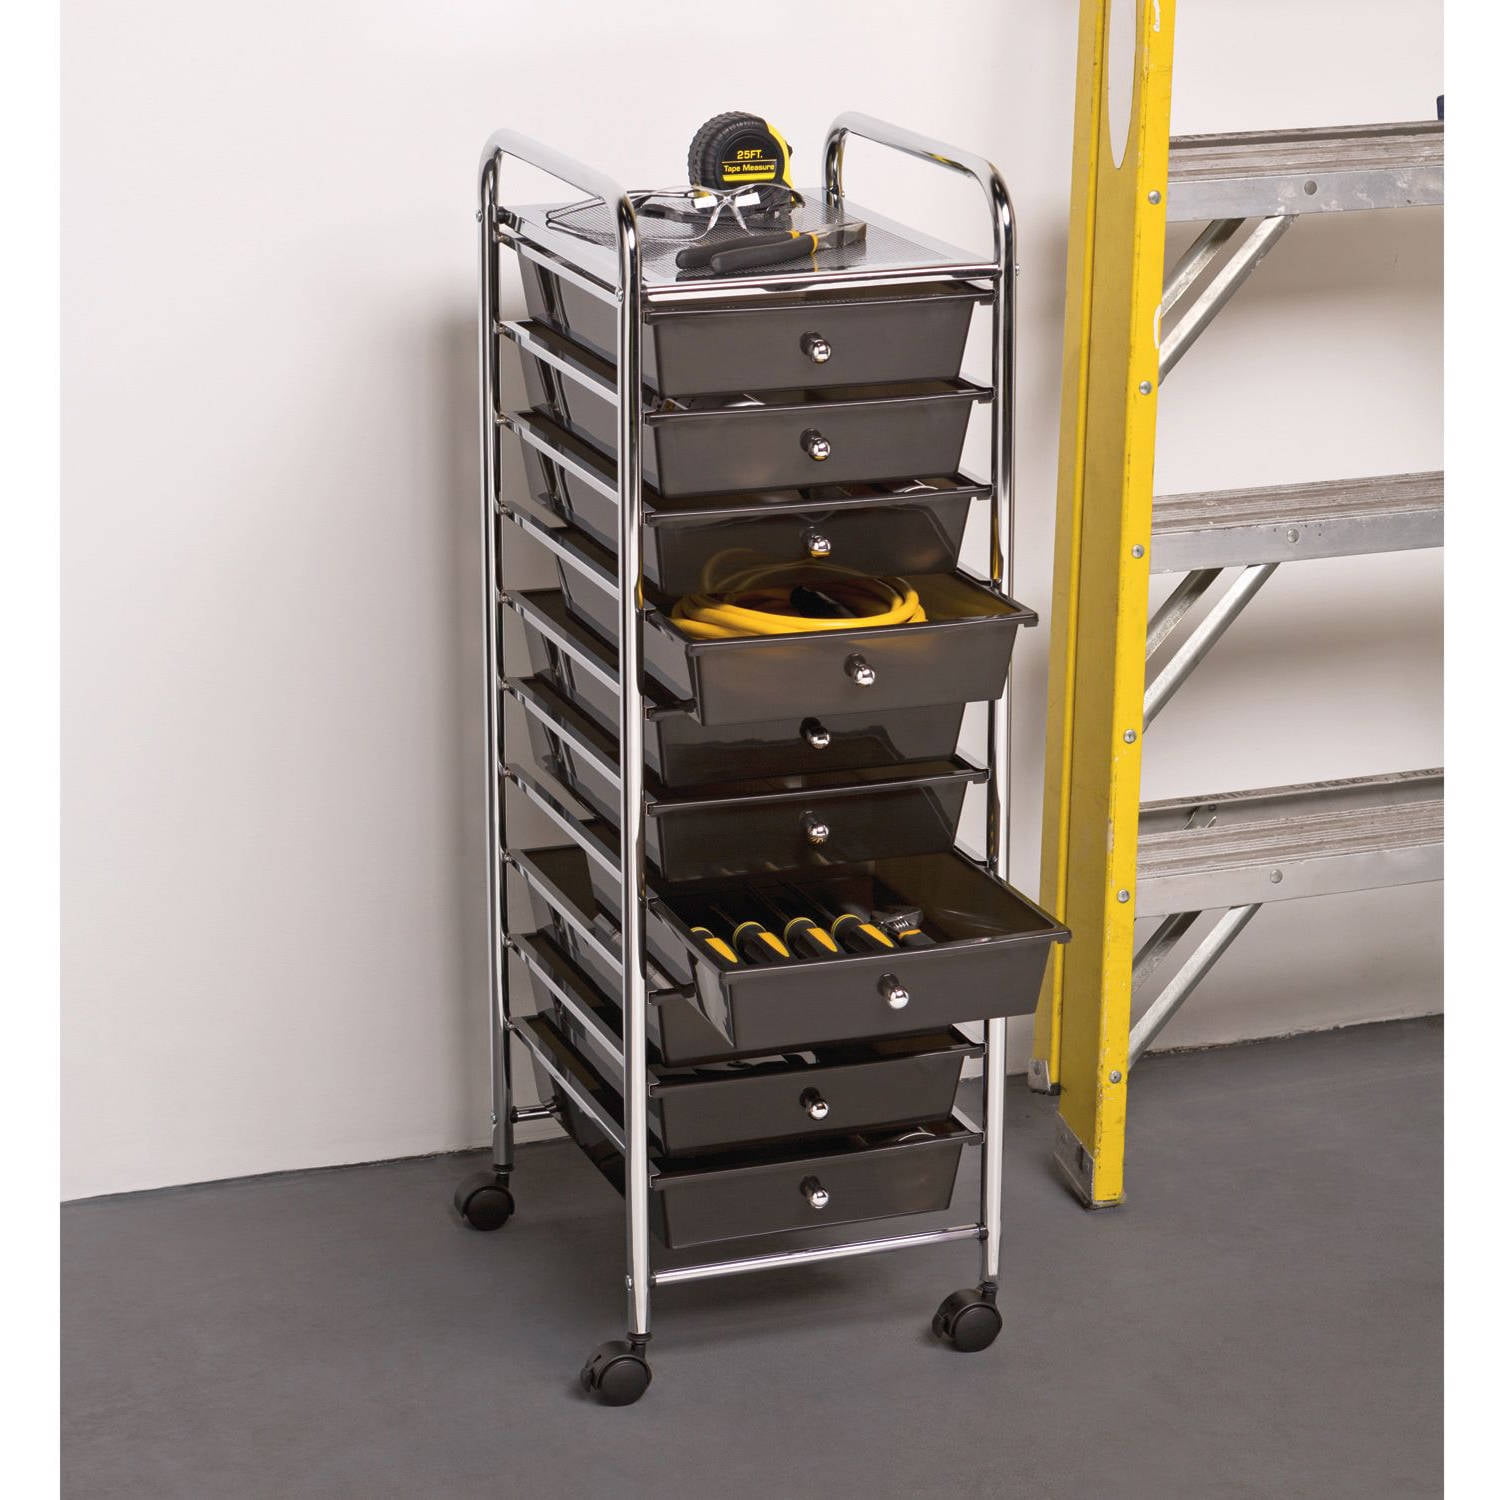 10Drawer Organizer Cart, Black Home/office Storage Chrome Steel